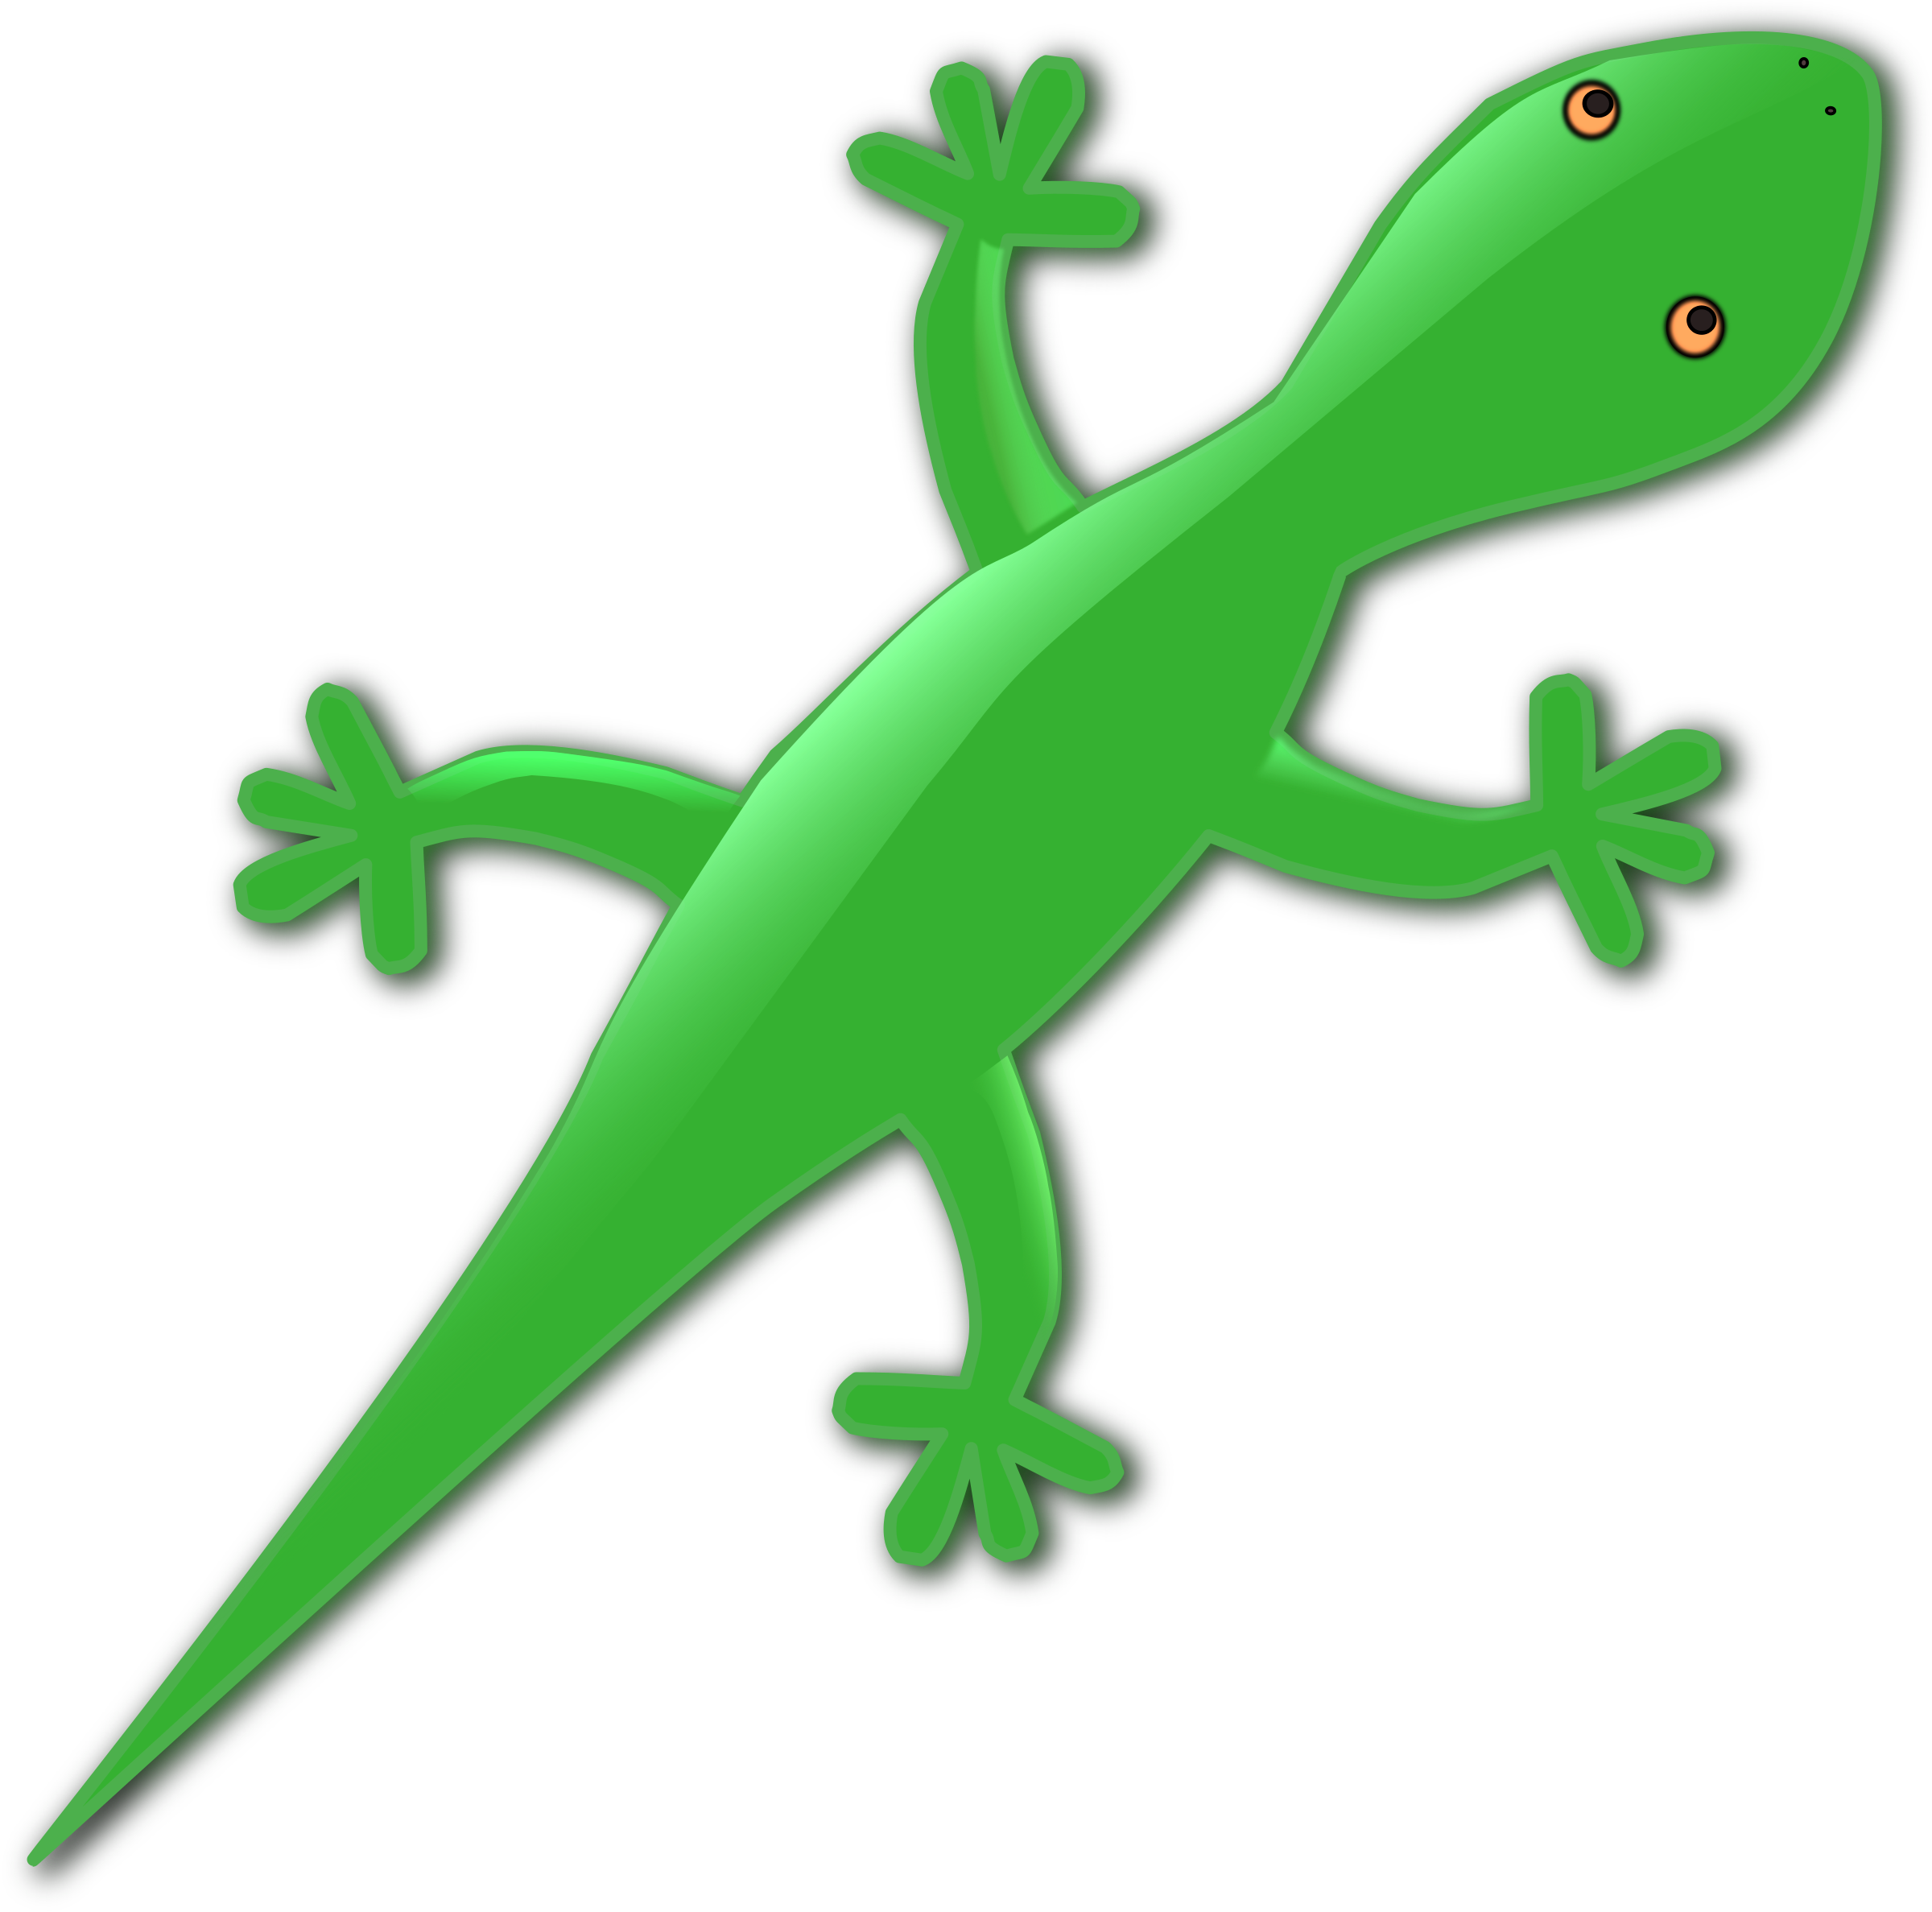 Green Gecko Lizard Vector Clipart image Free stock photo Public